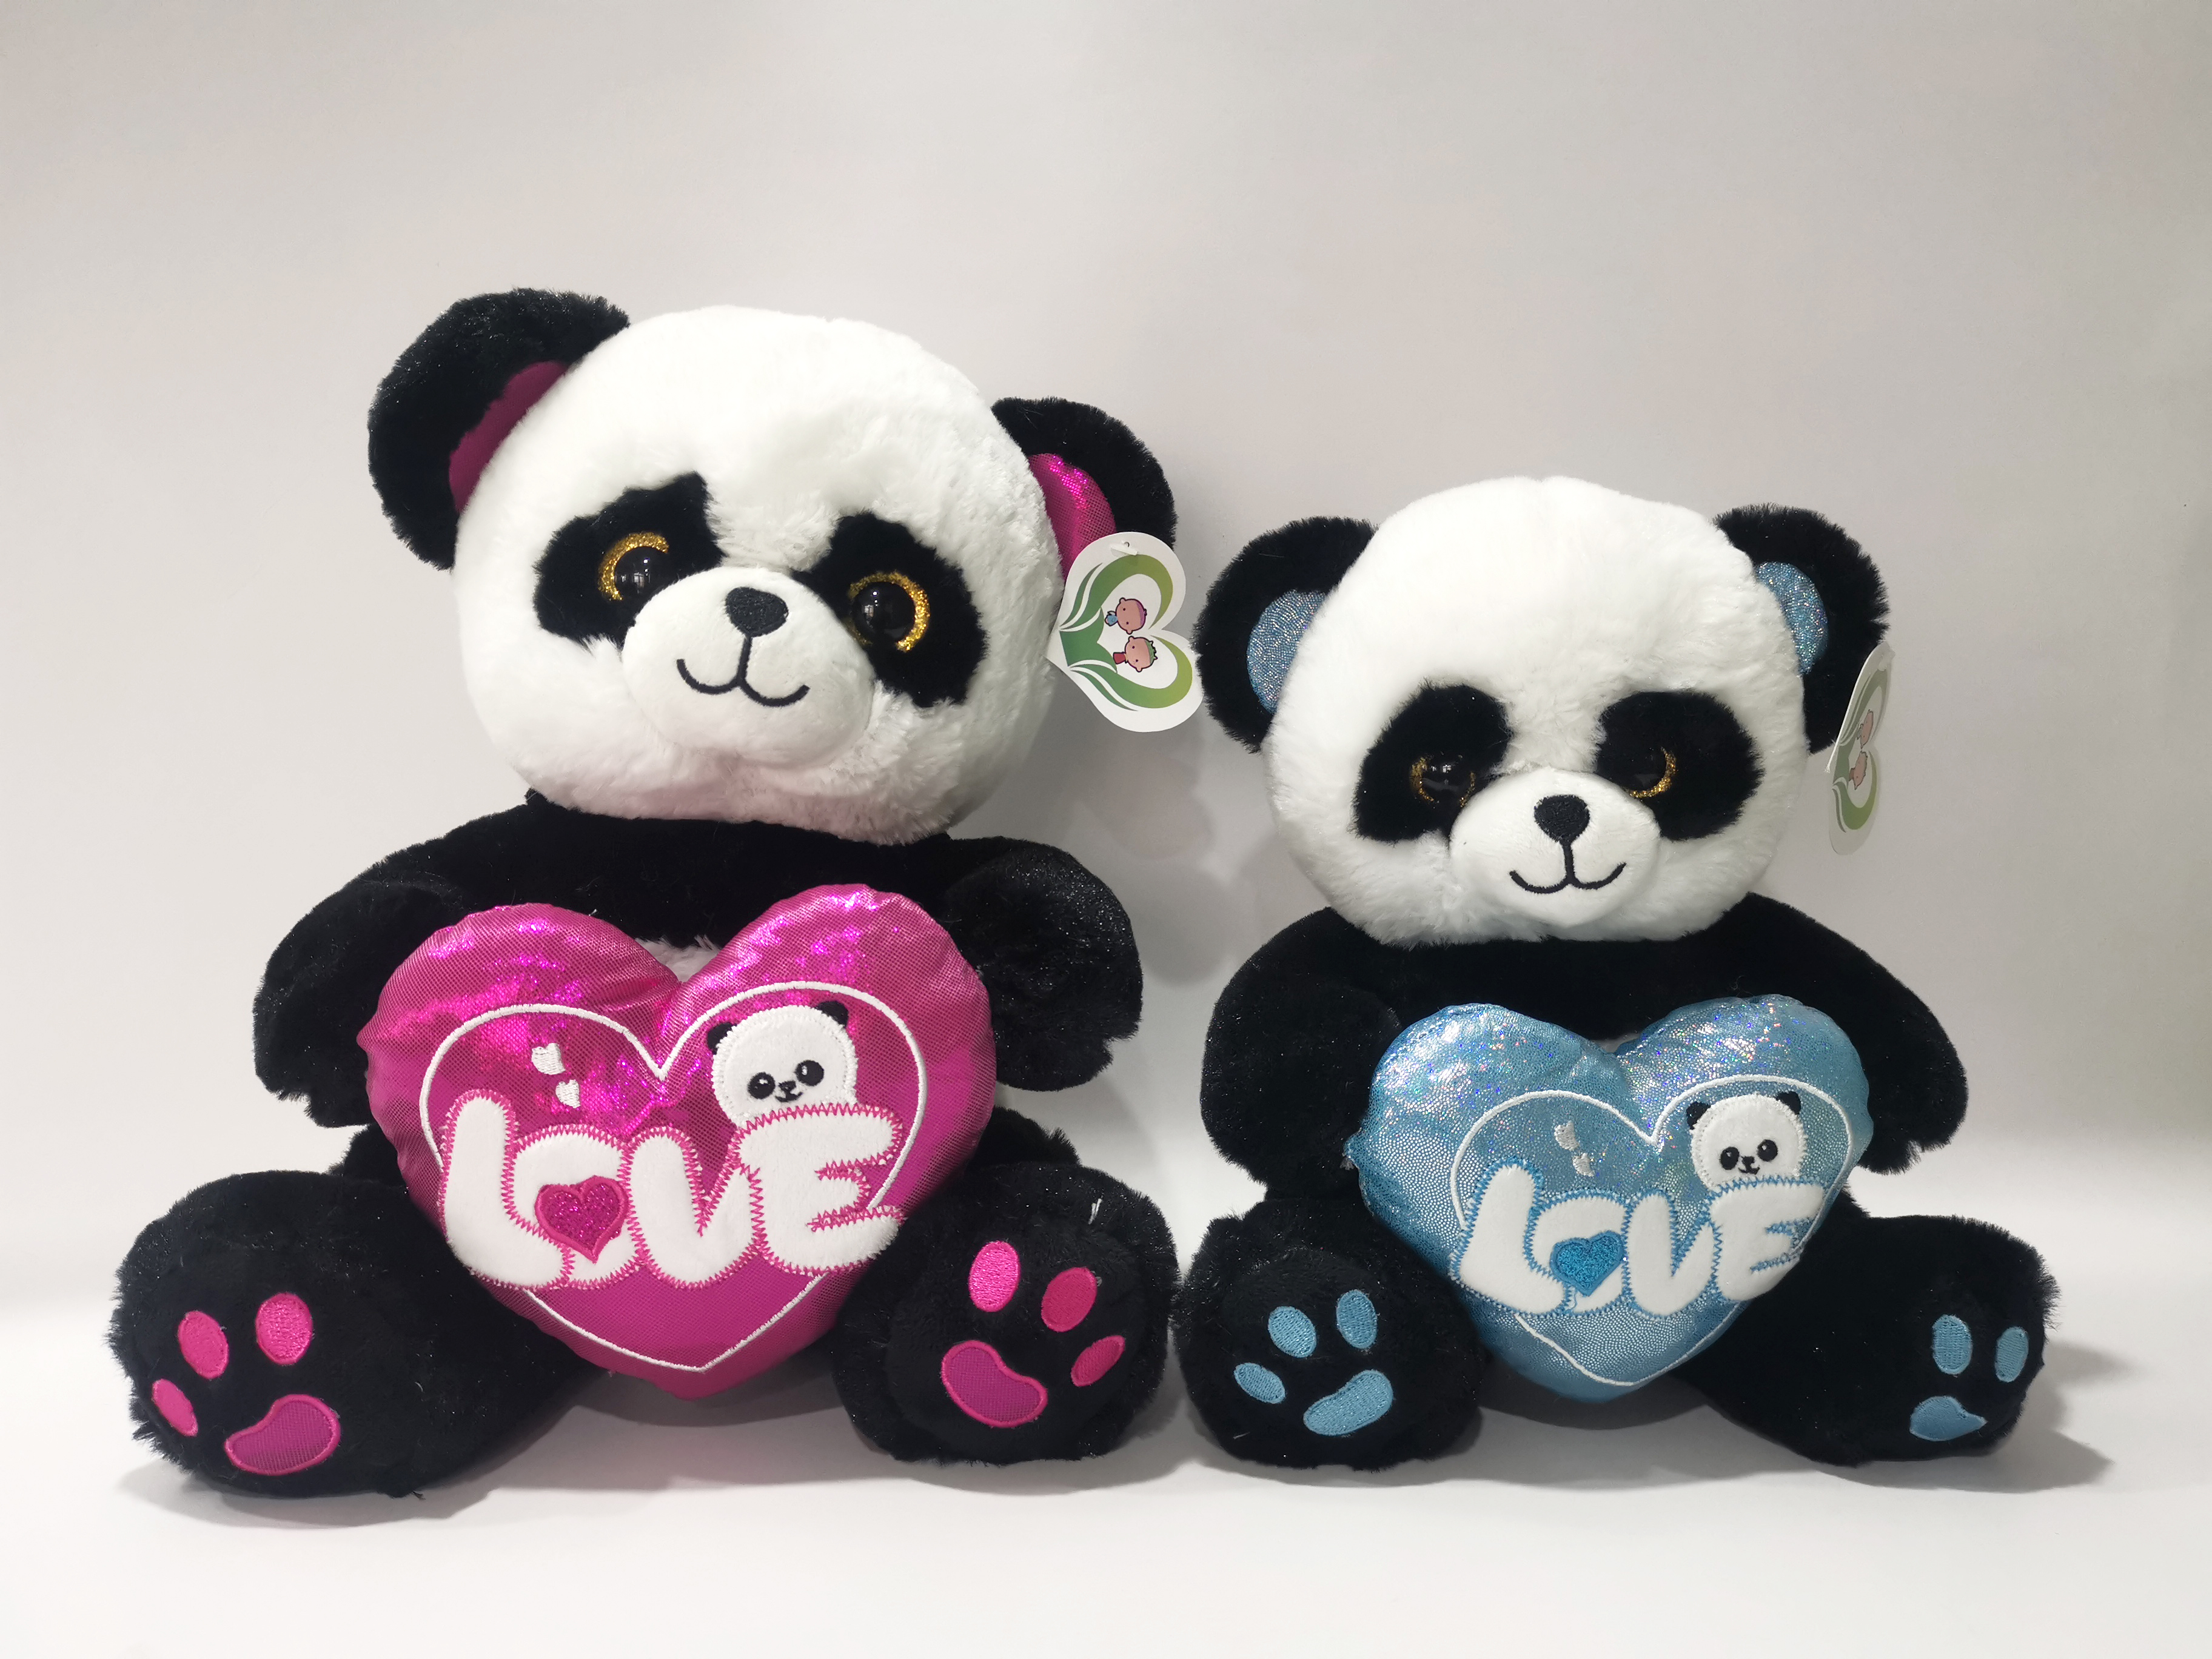 2019 Valentine Plush Toys: Panda with heart 